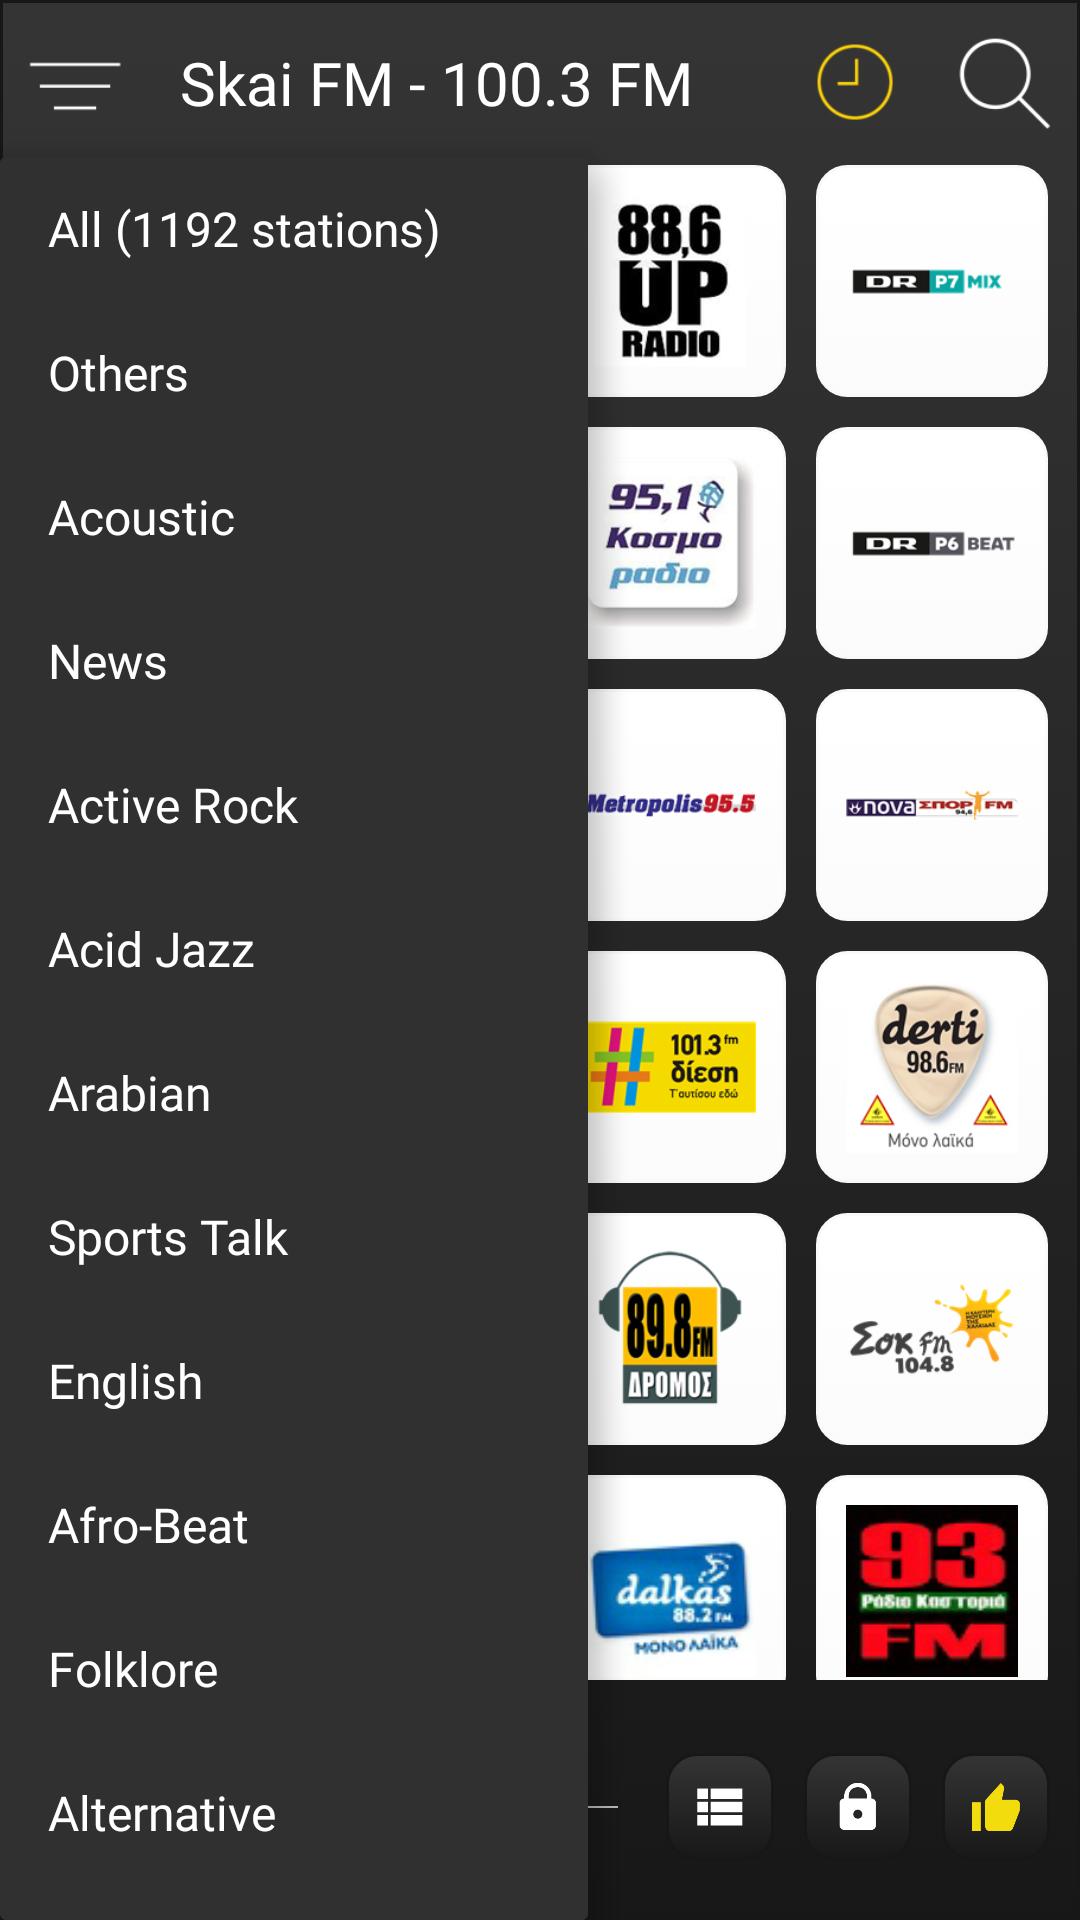 Greek Radio FM Live Online for Android - APK Download